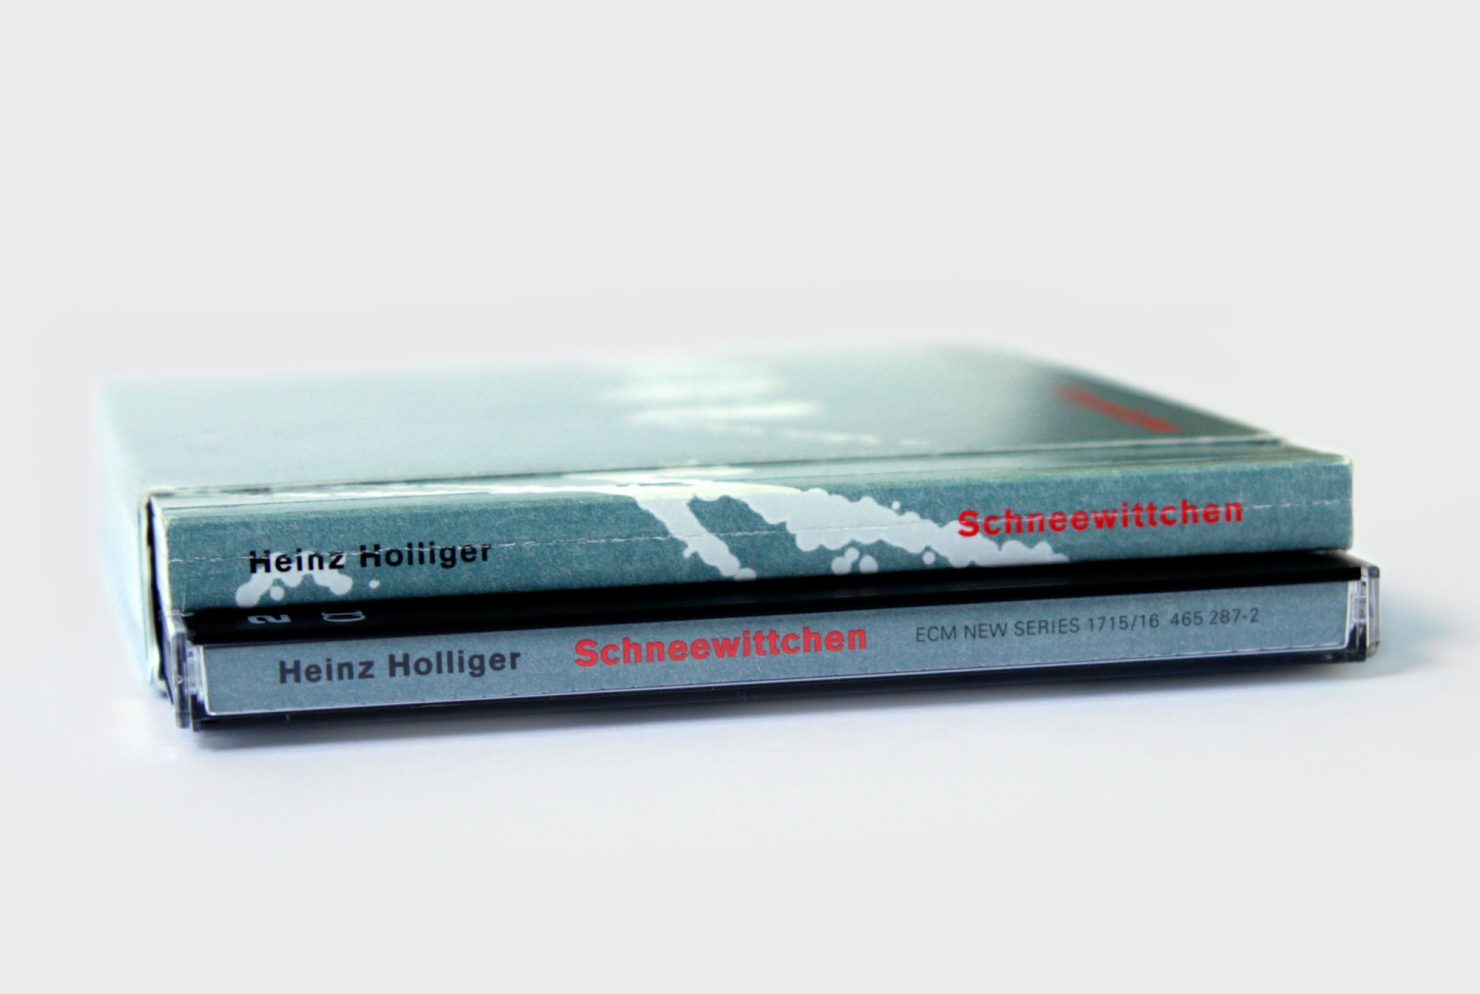 CD-hüllendesign ecm_new_series_heinz_holliger_schneewittchen_neue_musik_CD